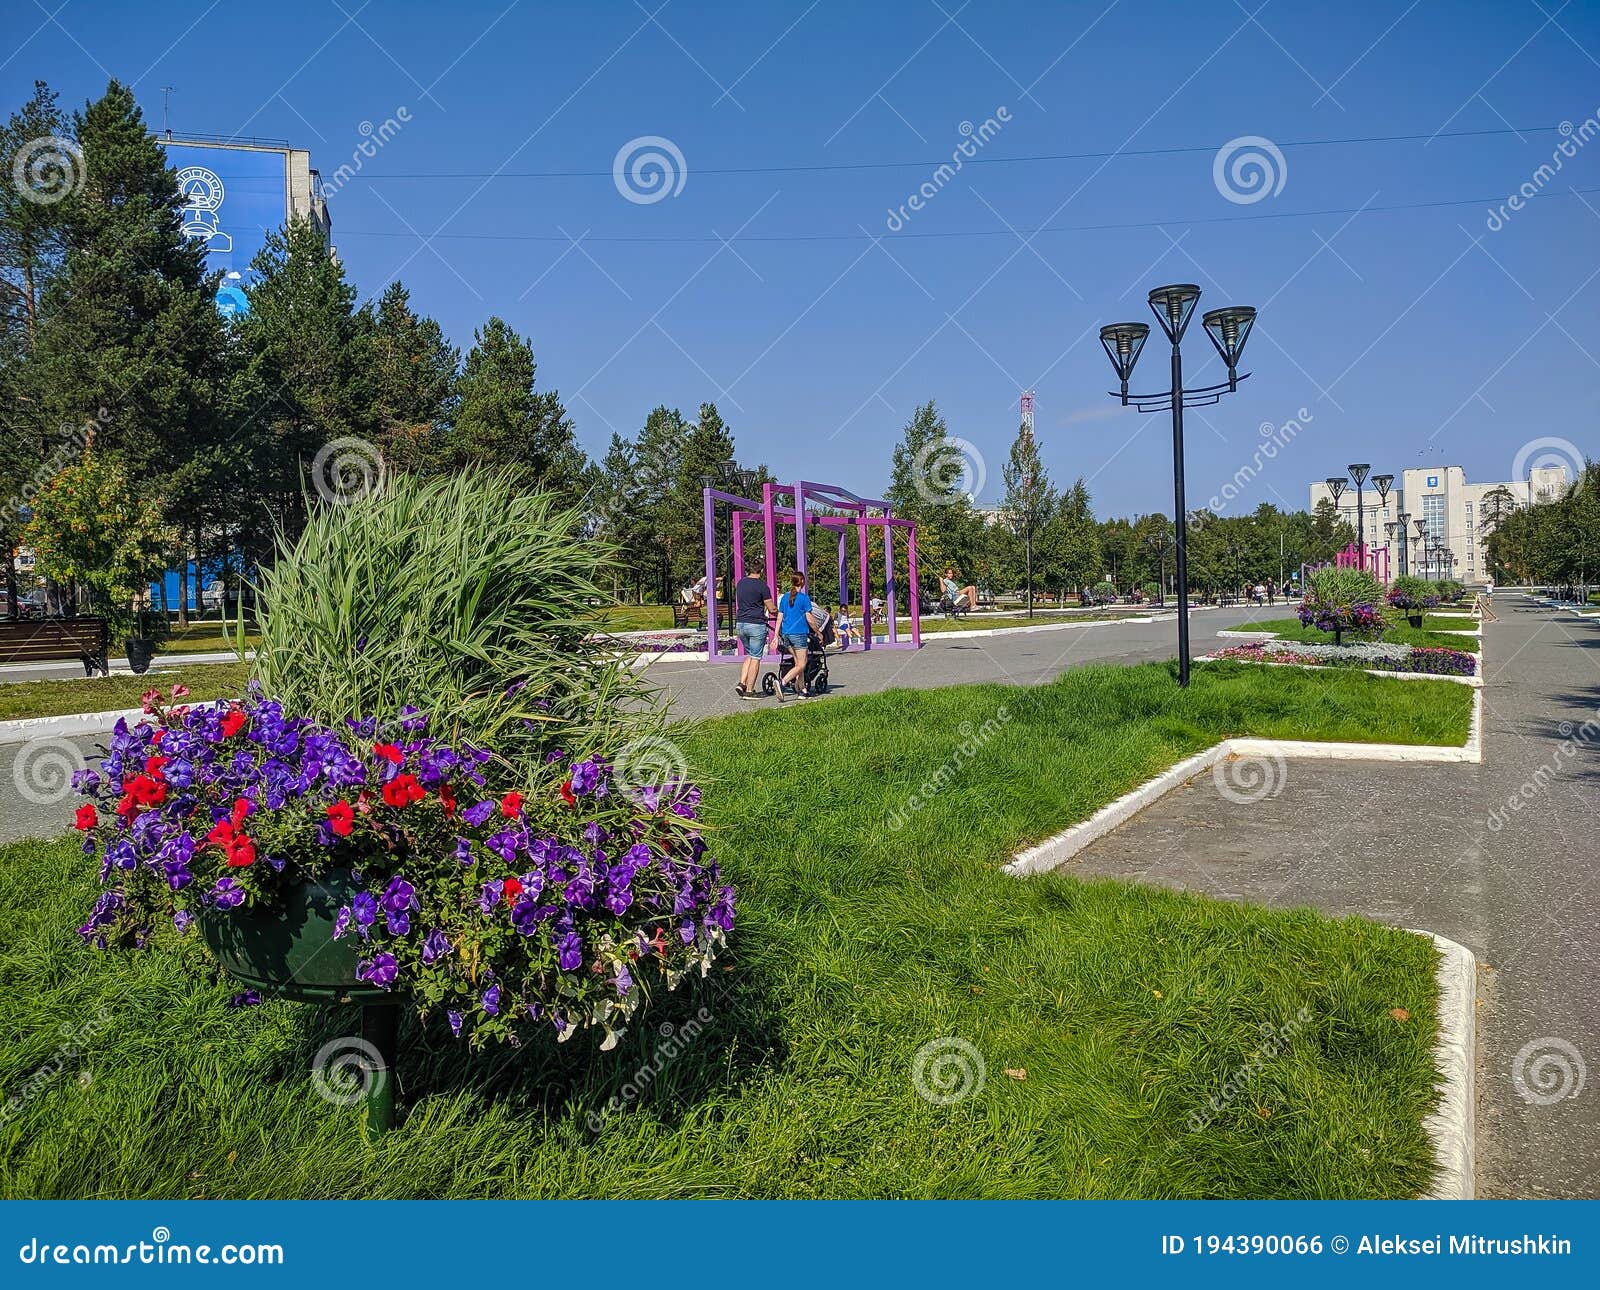 Noyabrsk, Russia - August 8, 2020: Petunias Petunia Hybrida in a